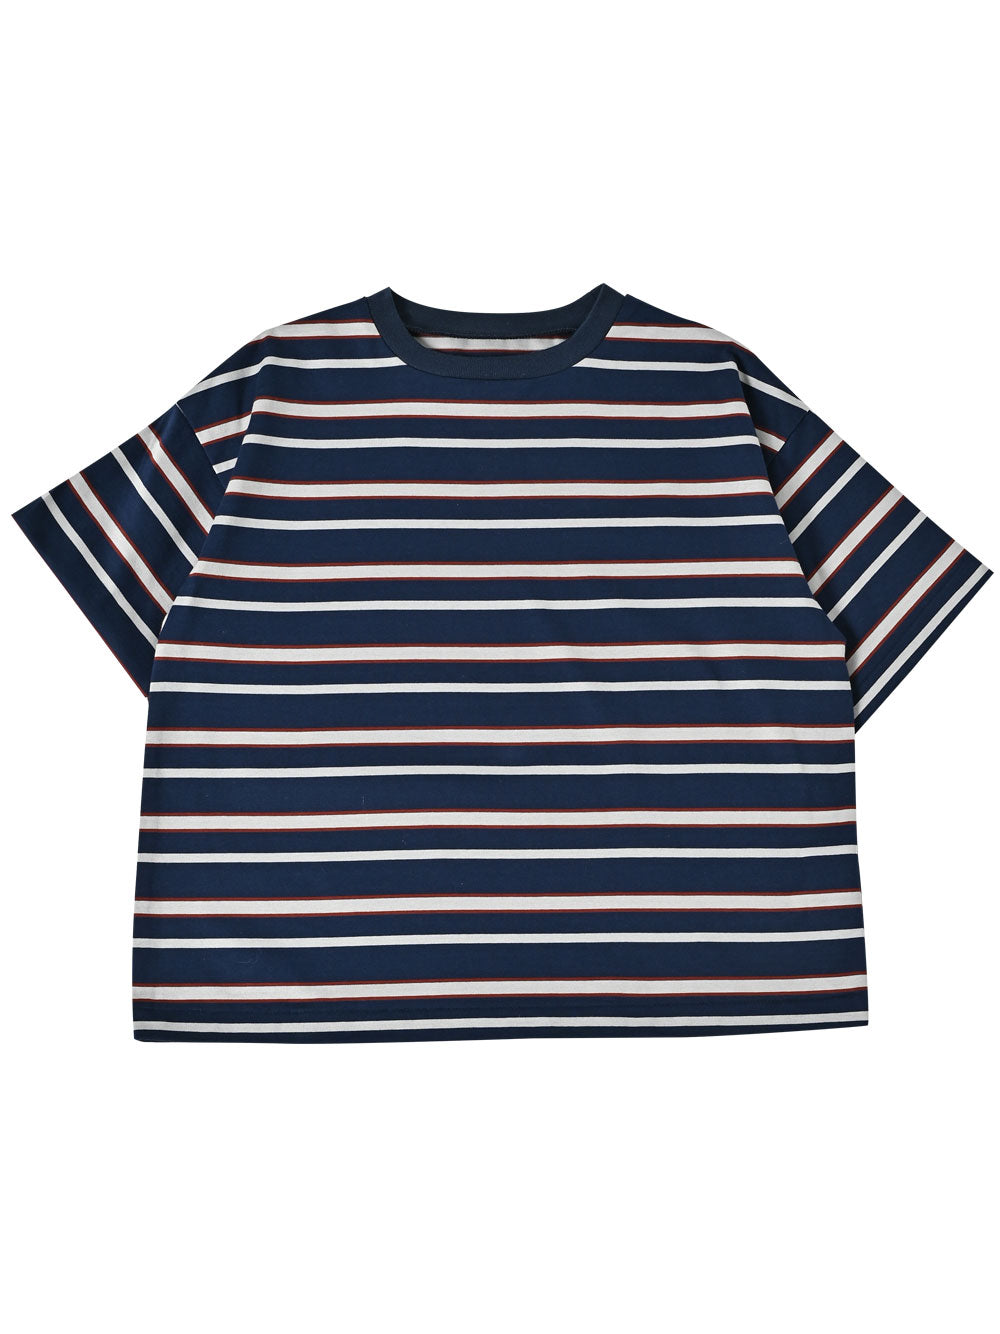 PREORDER: Navy Striped T-Shirt